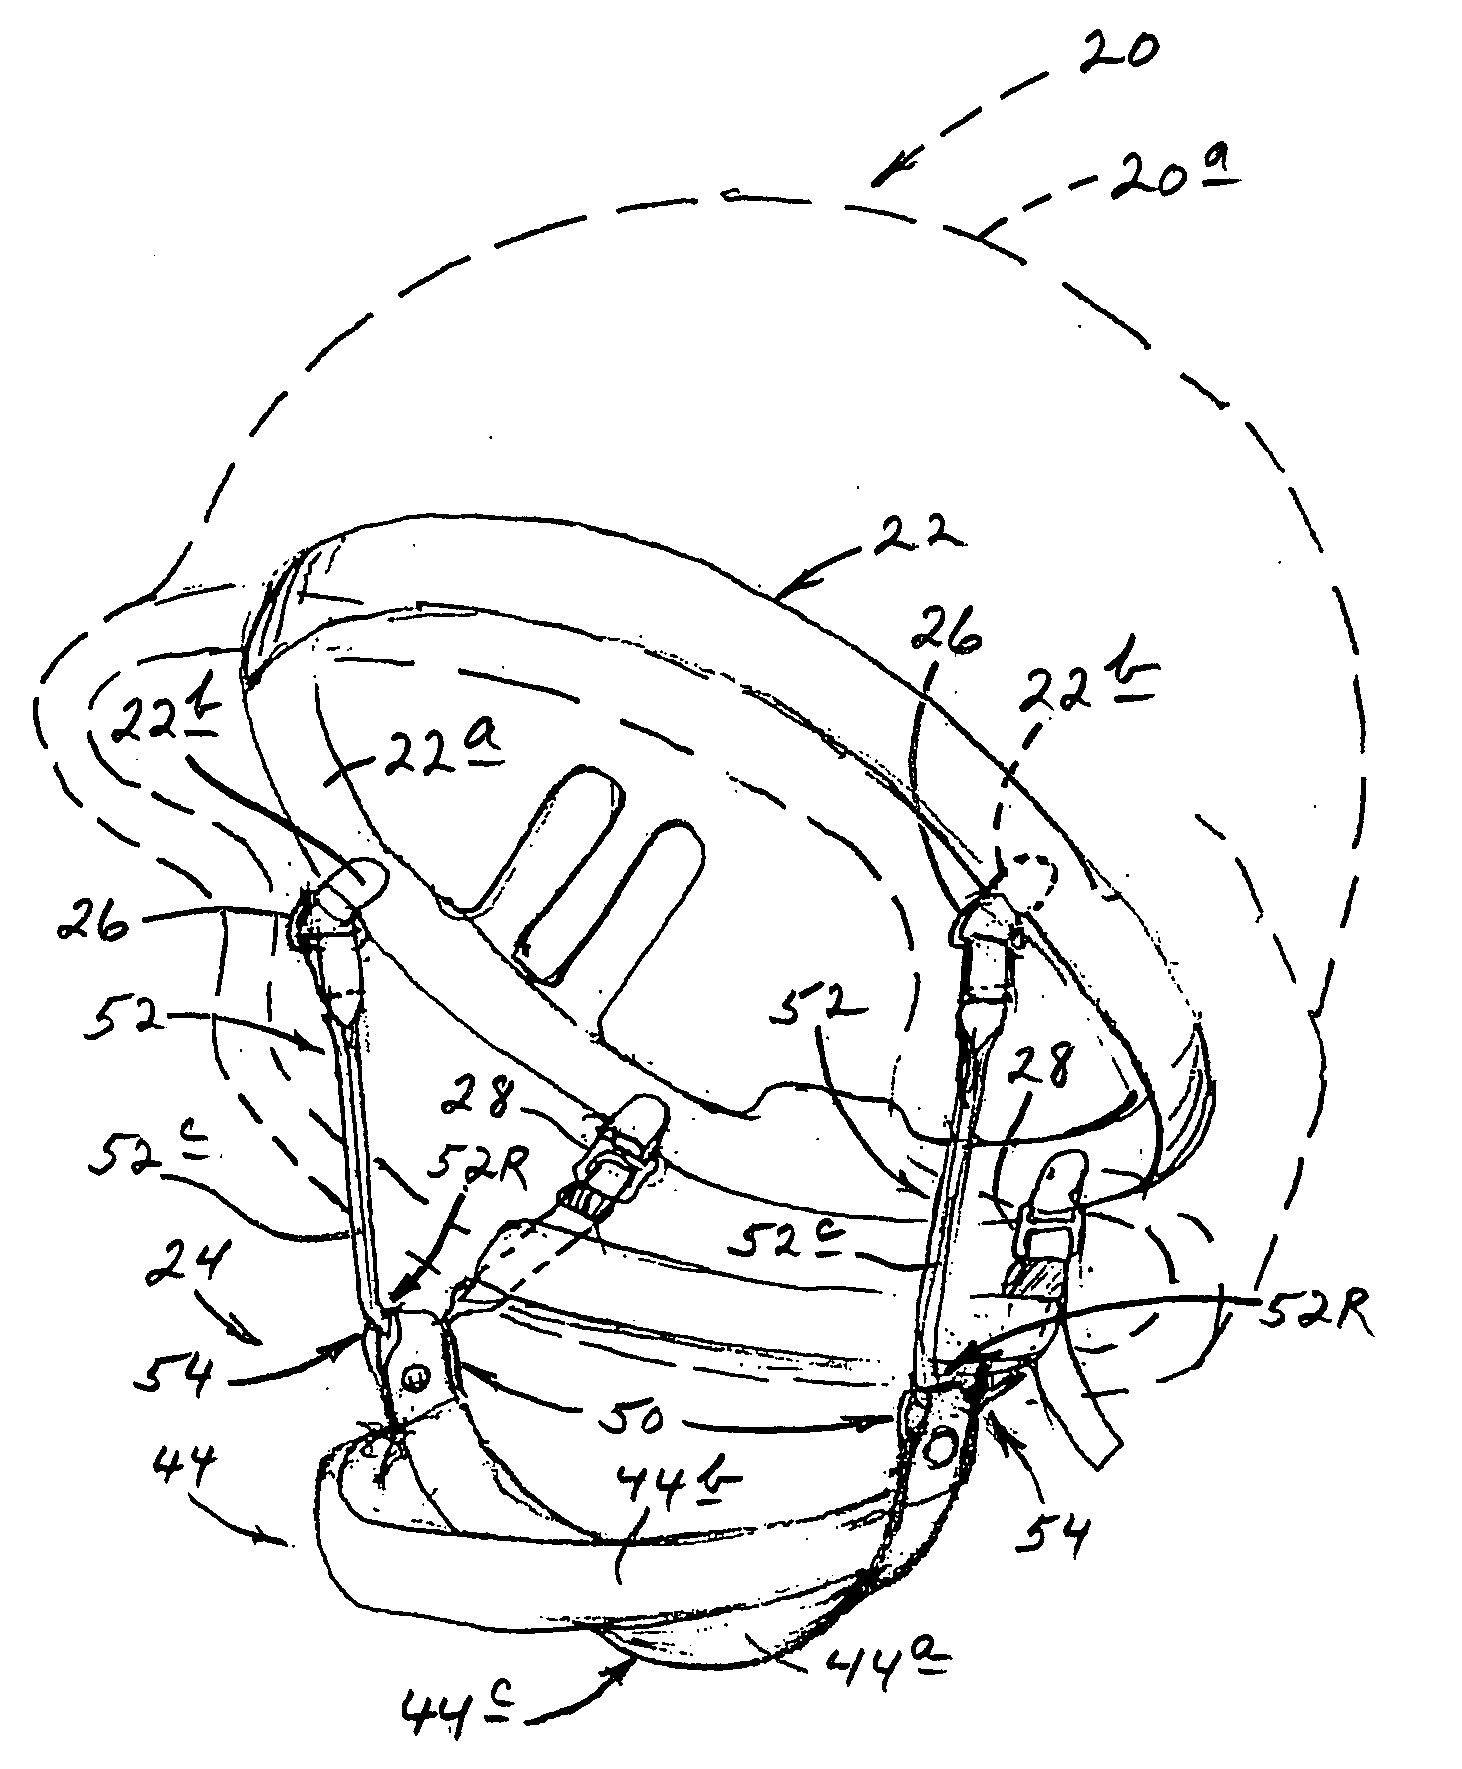 Helmet chin-strap harness structure